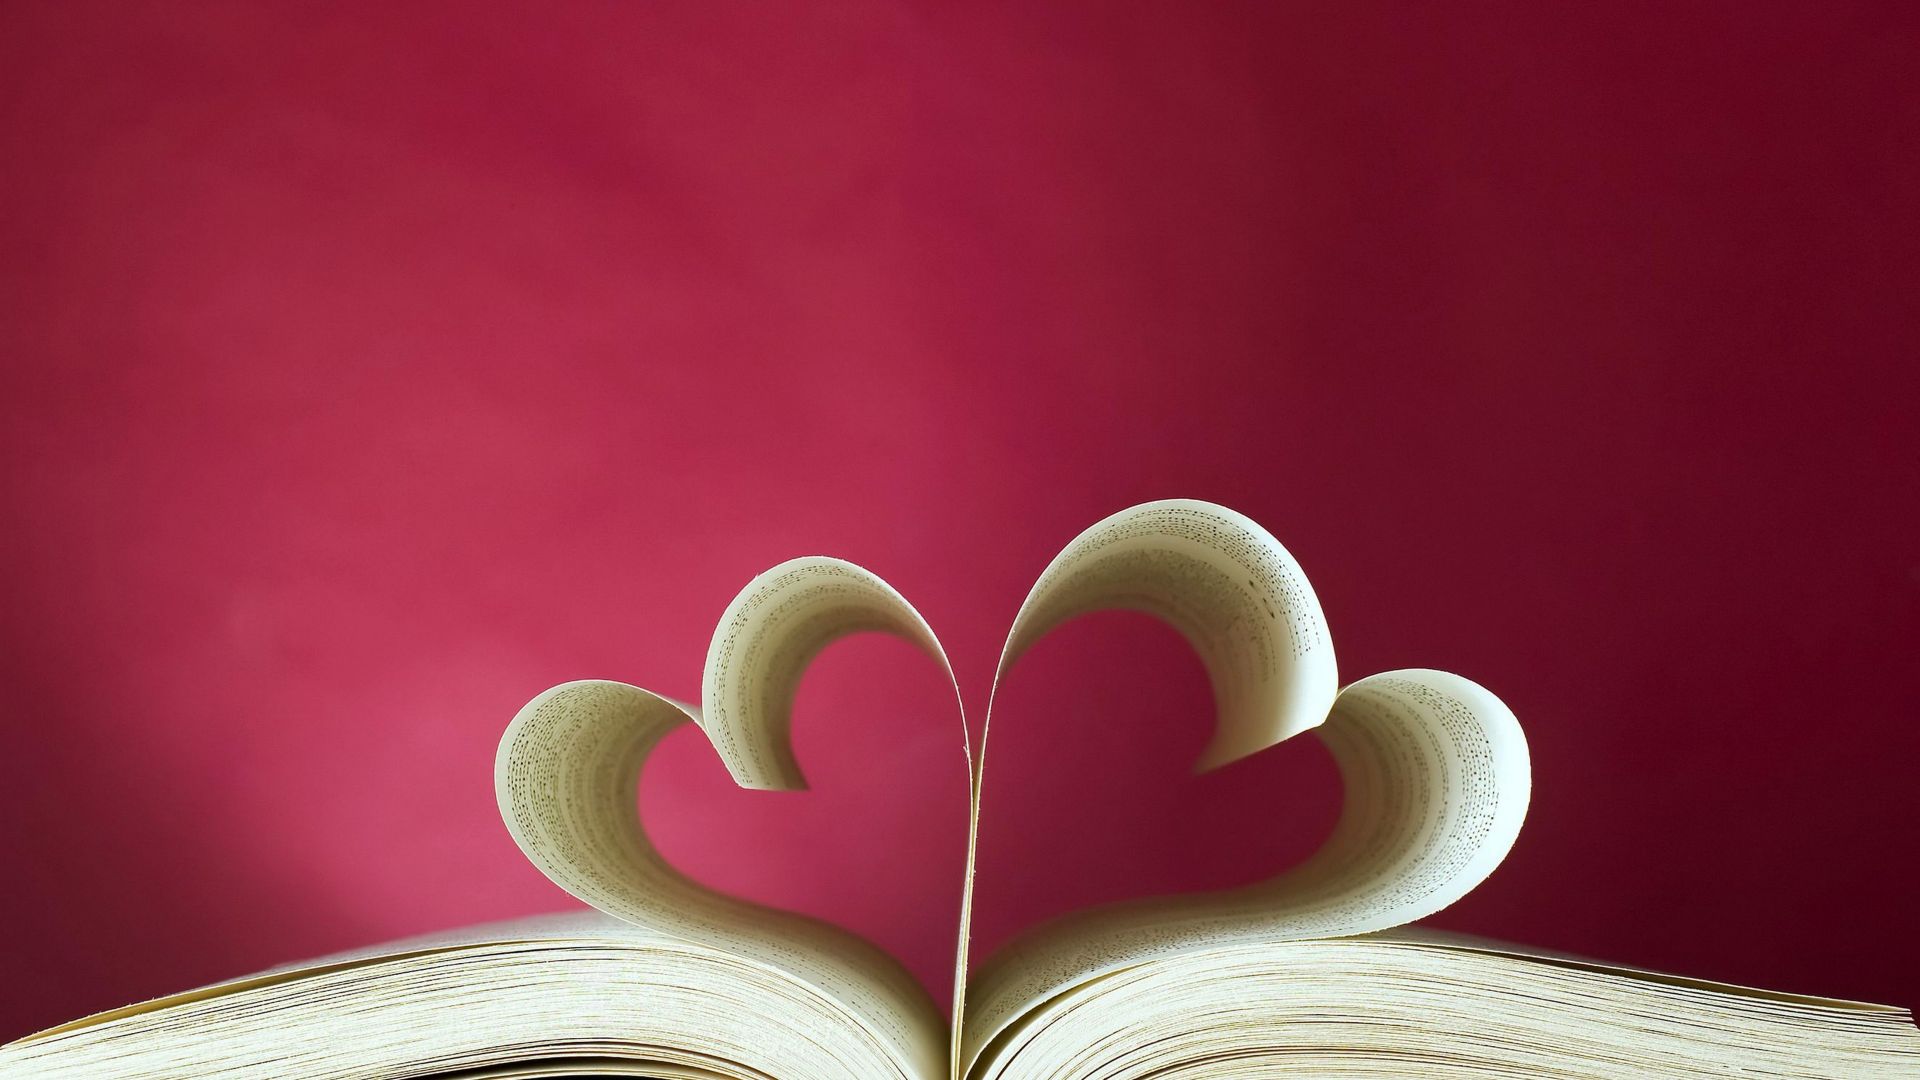 фото любовь, сердце, love image, heart, book, 5k (horizontal)